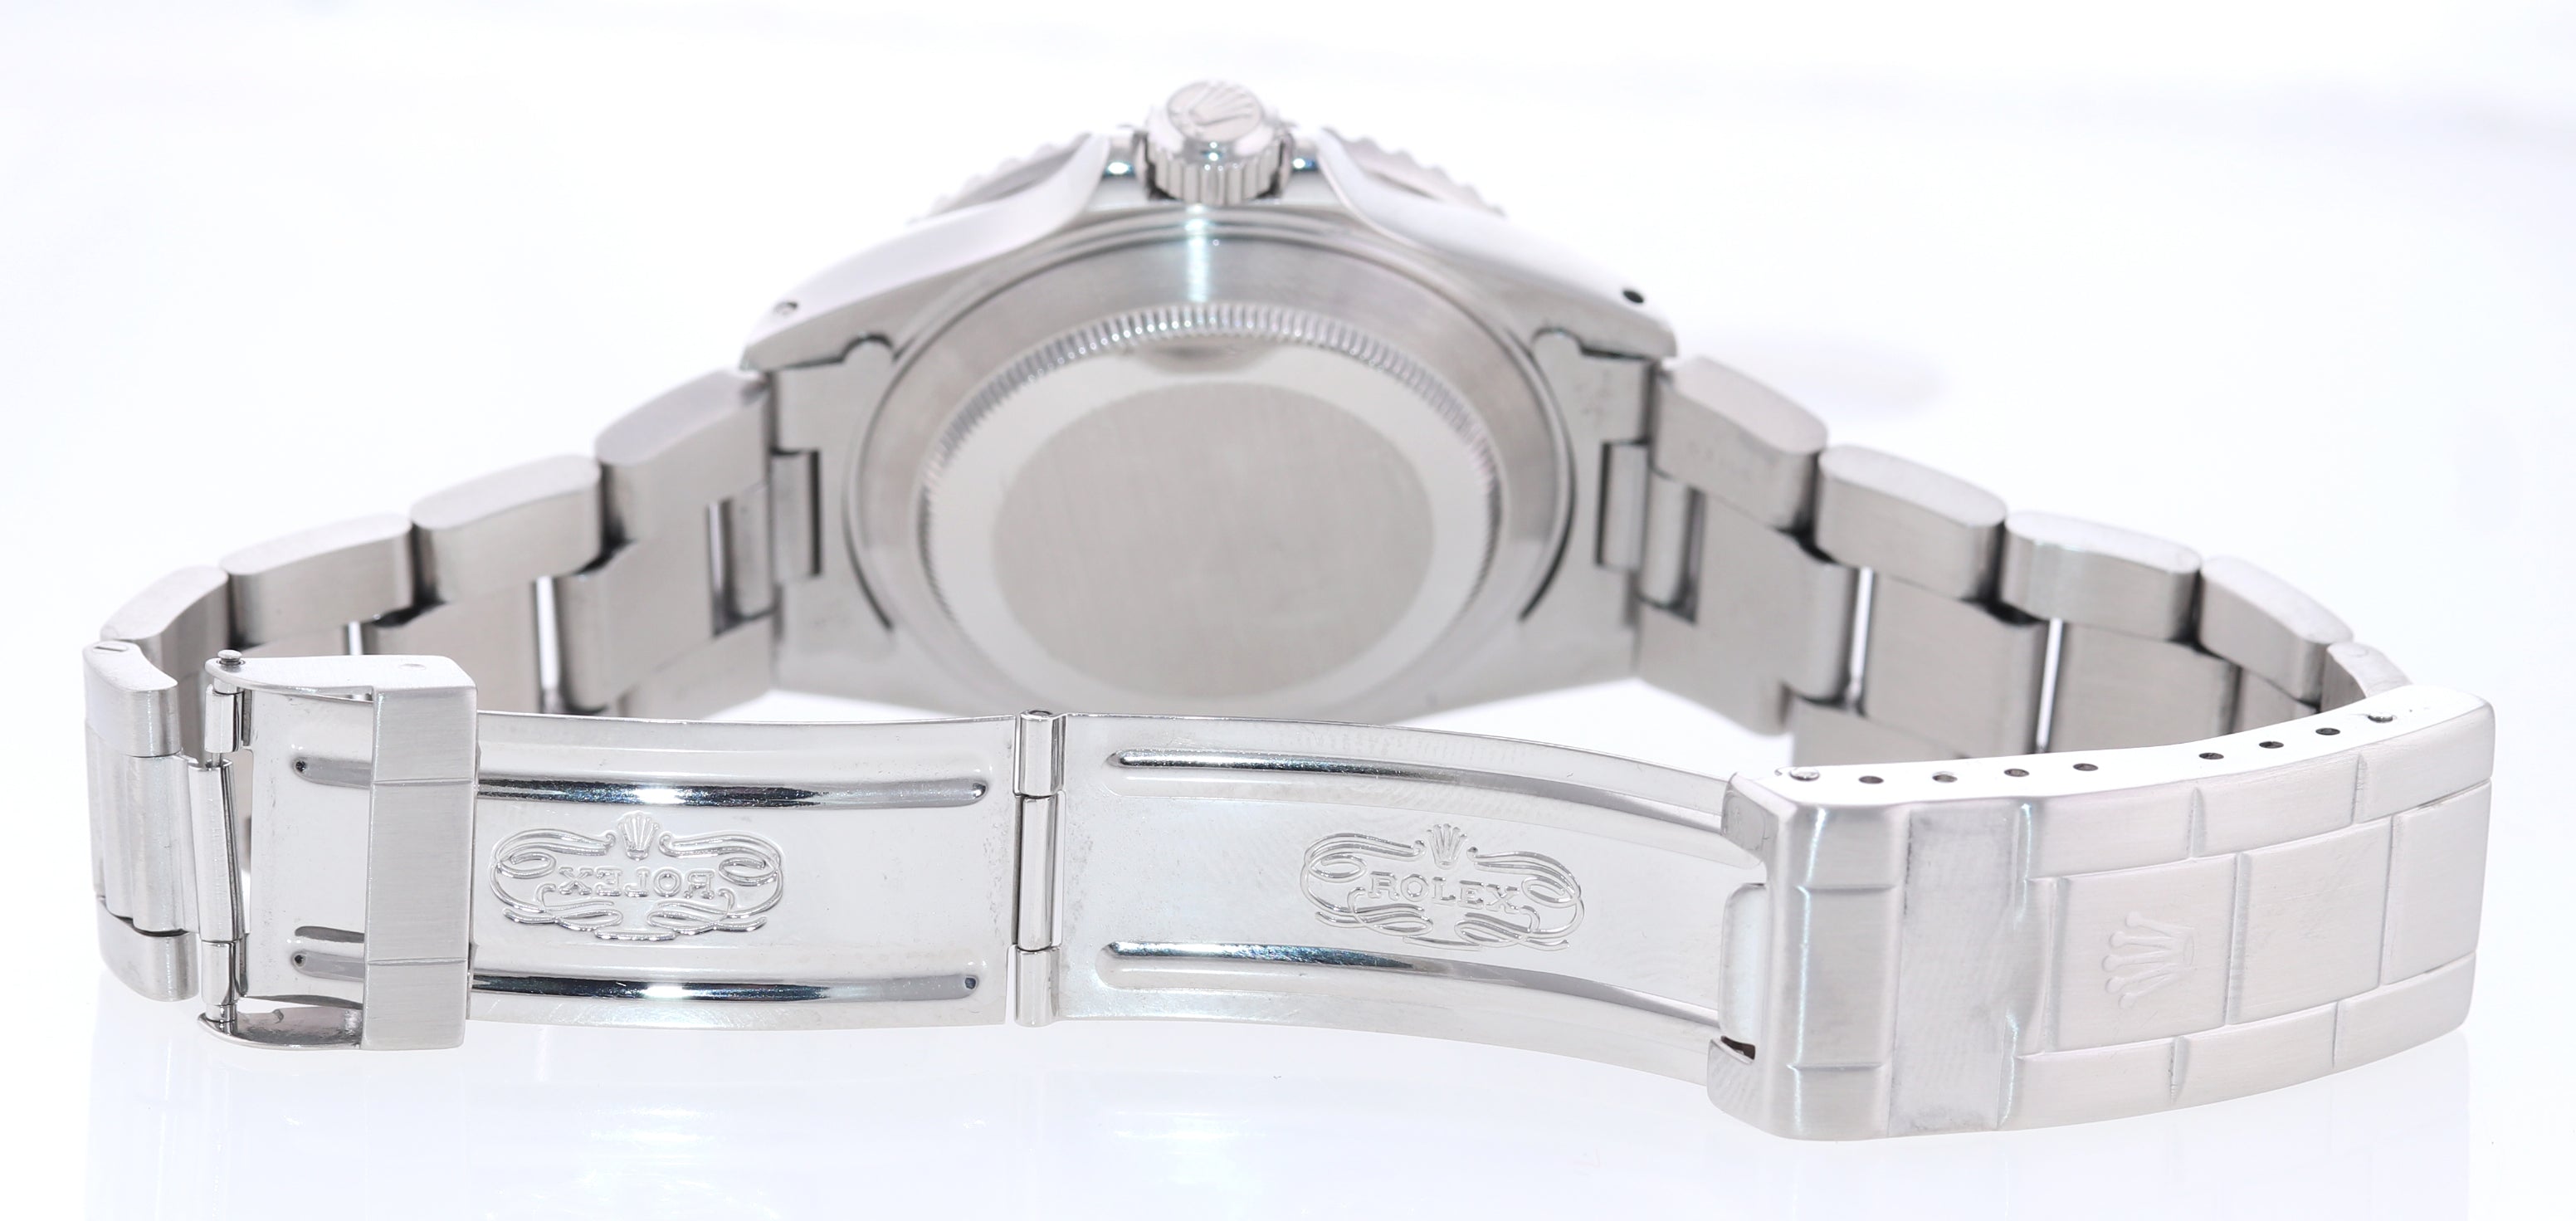 PAPERS Rolex 16610 Rolex Black Submariner Steel 40mm Oyster Watch Box